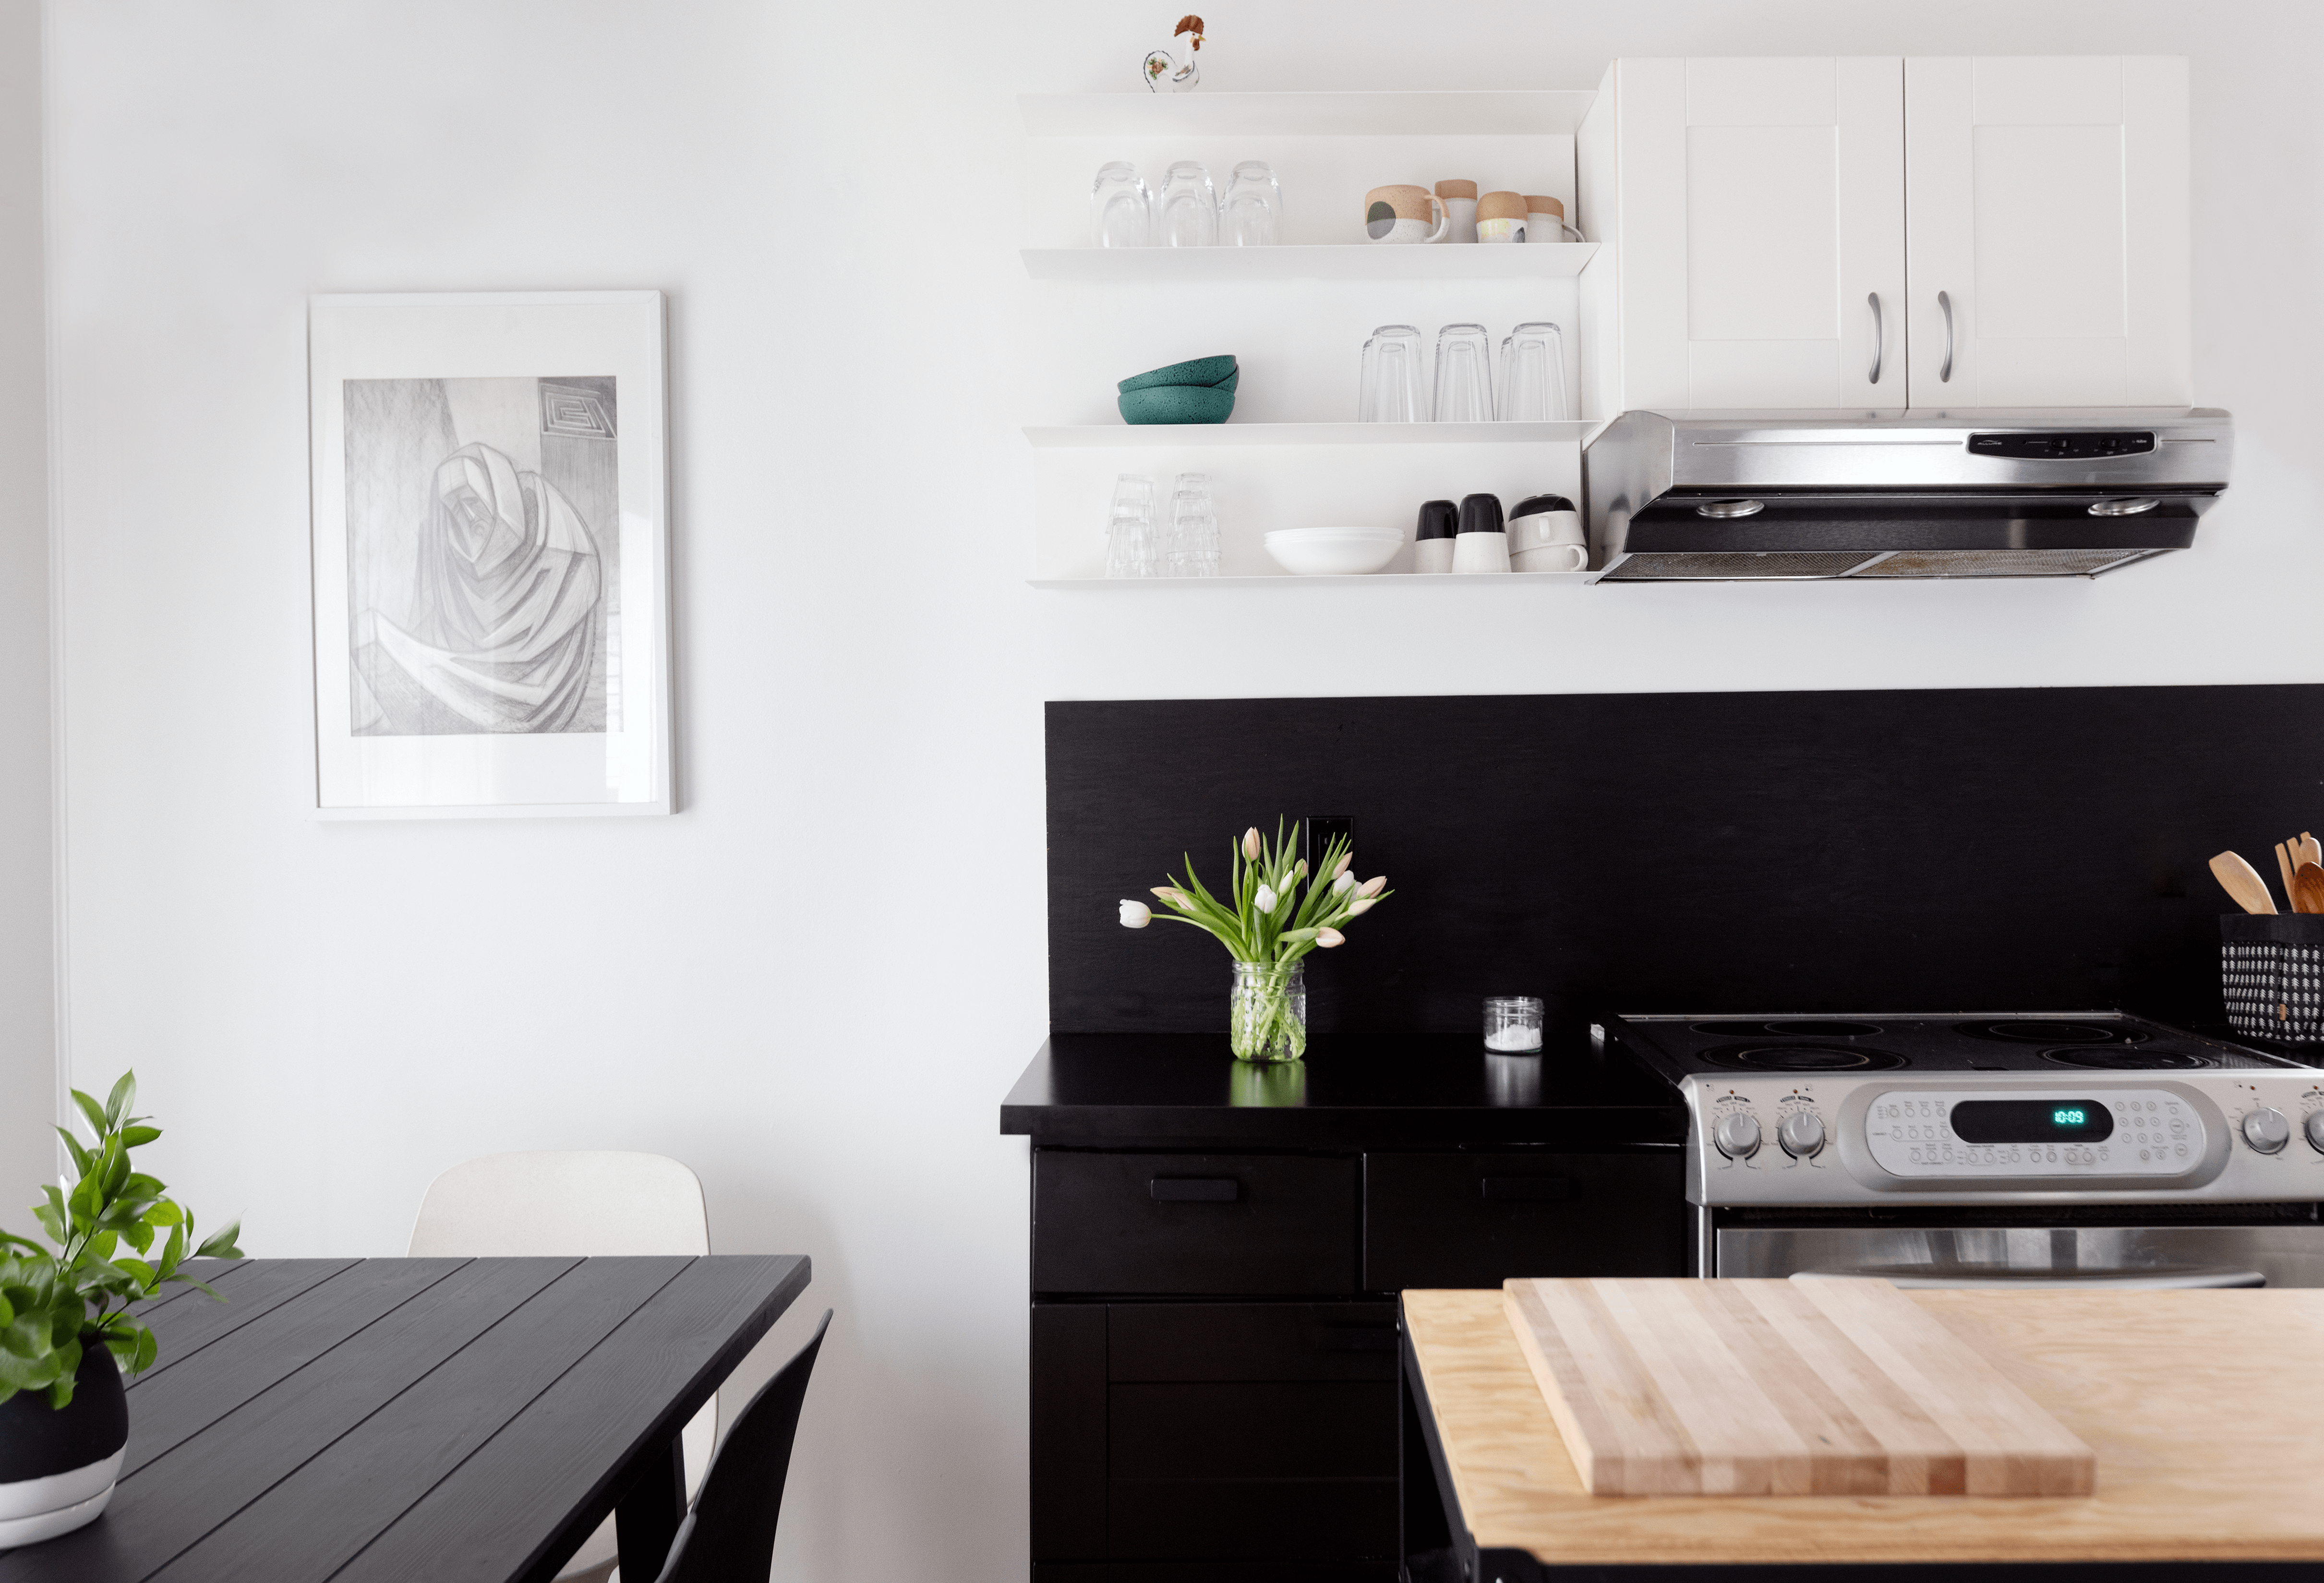 backsplash and kitchen counter